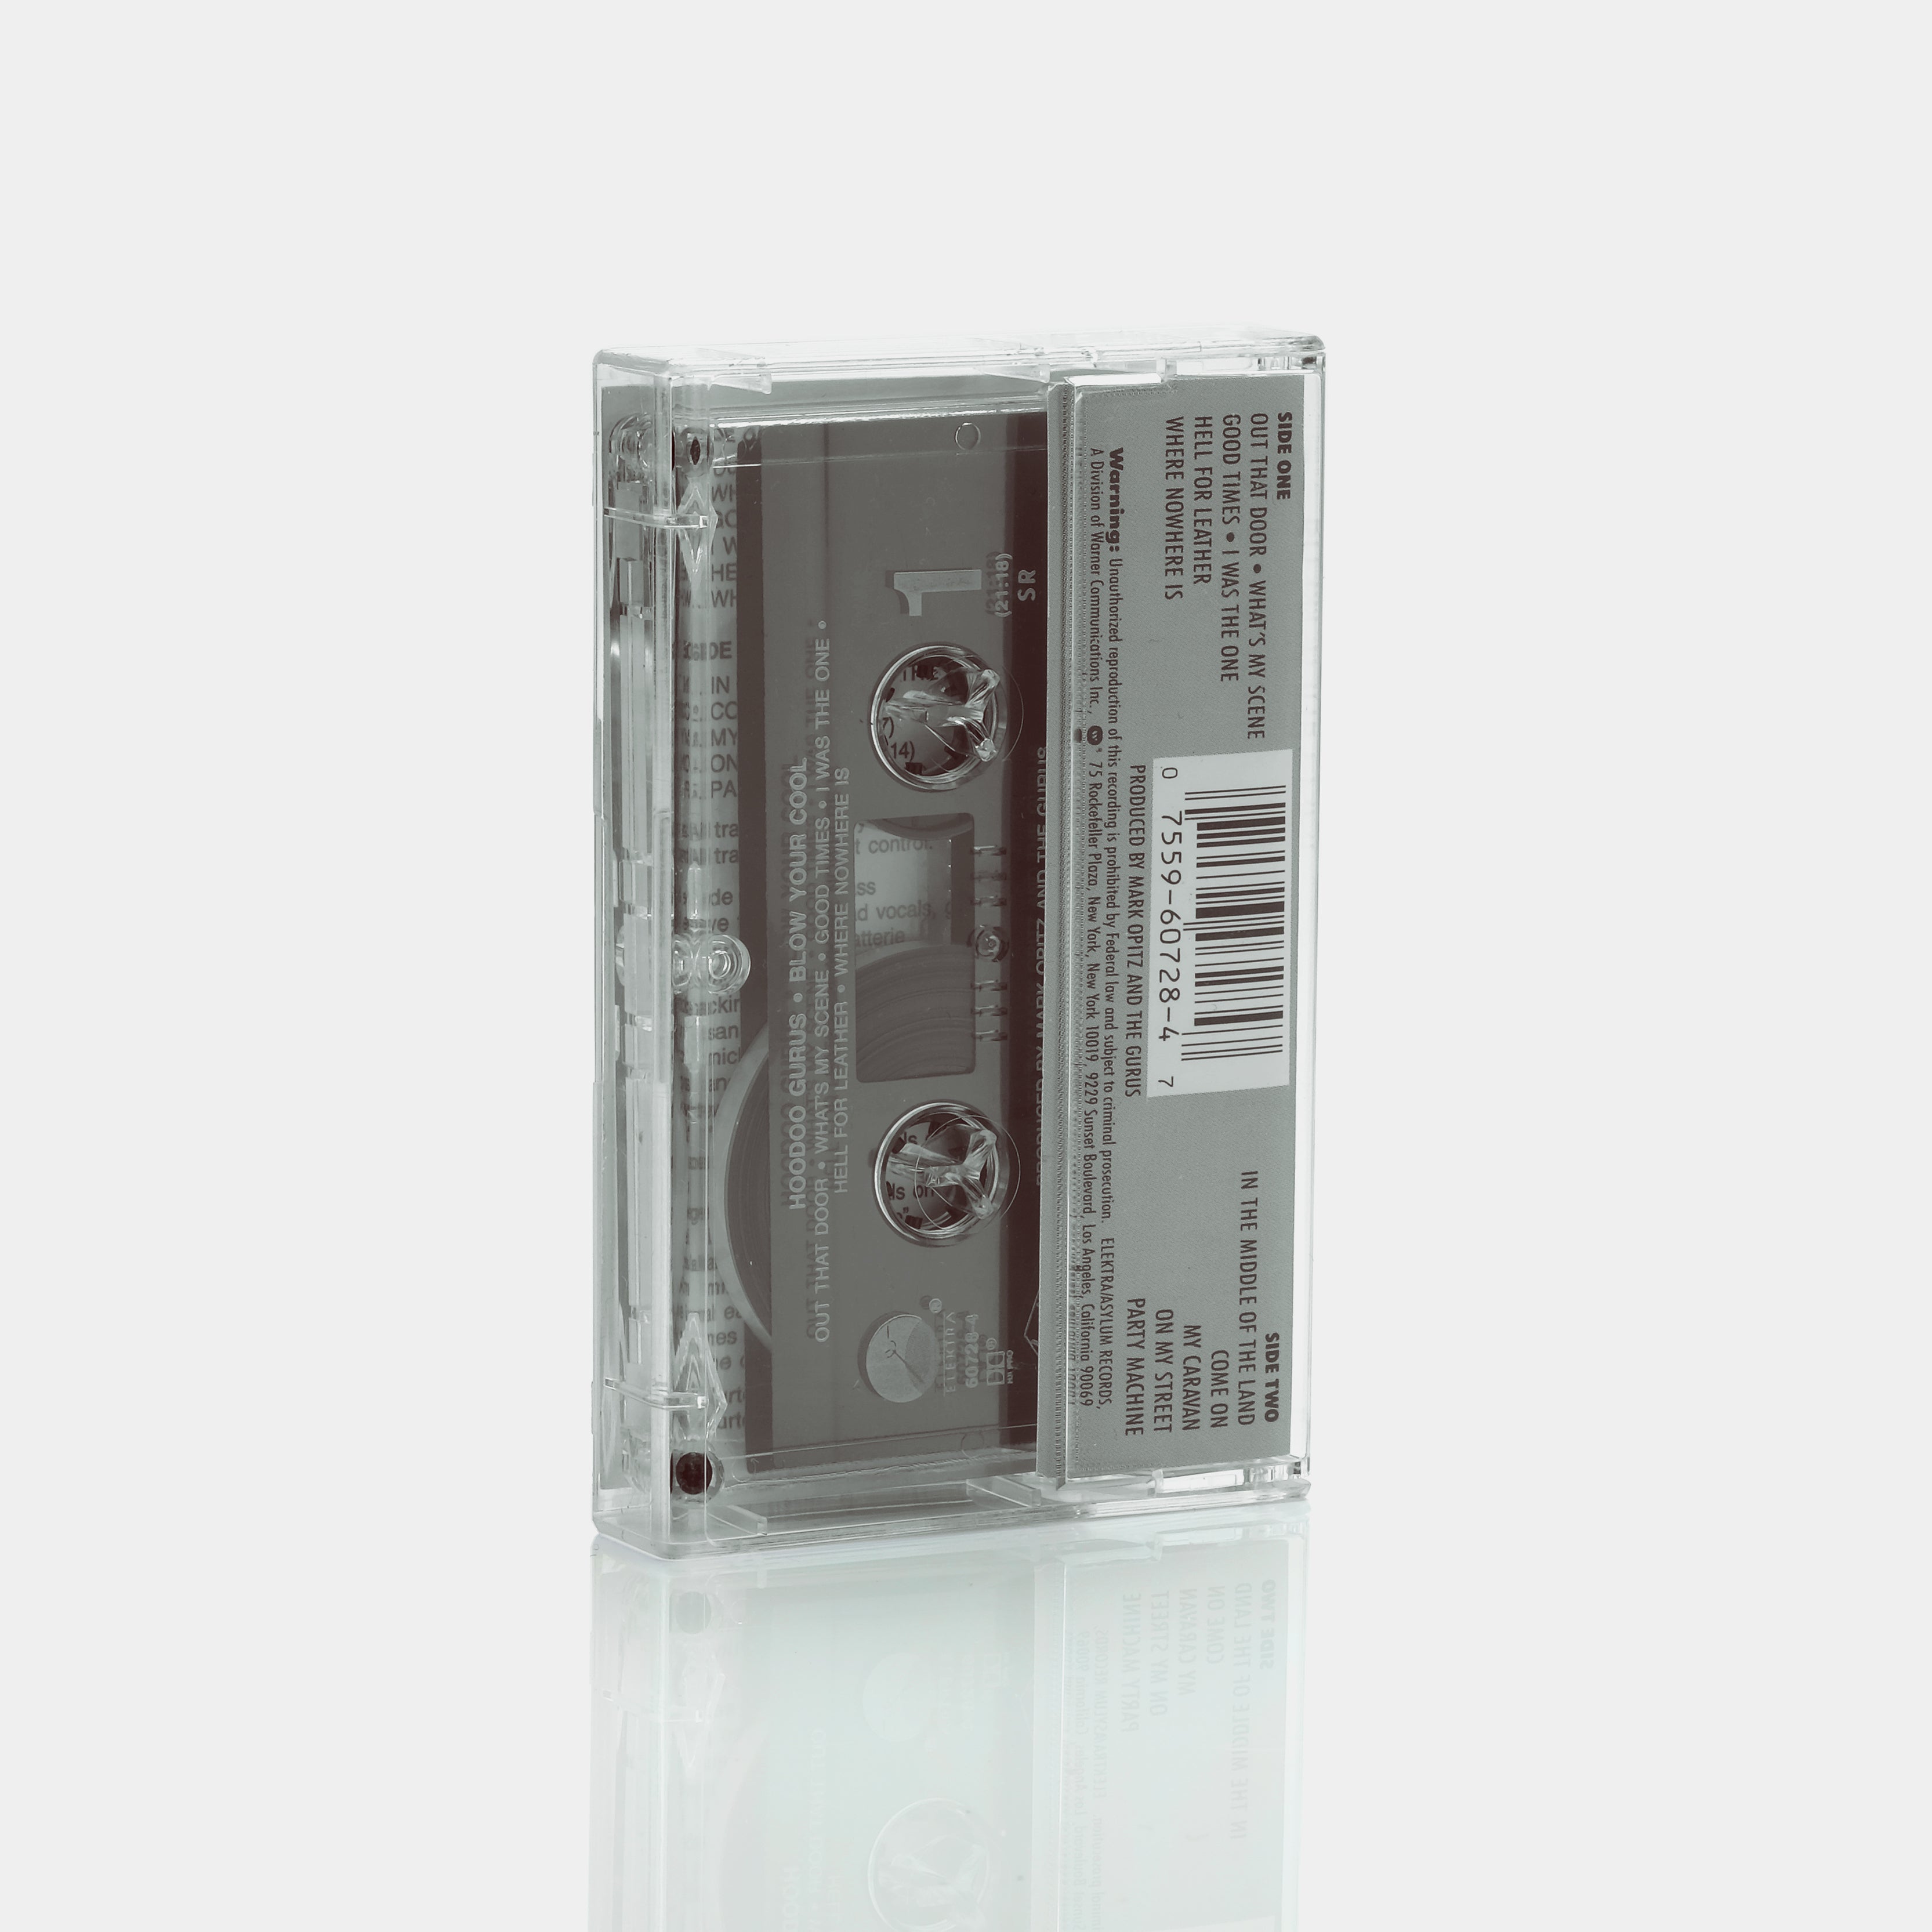 Hoodoo Gurus - Blow Your Cool Cassette Tape